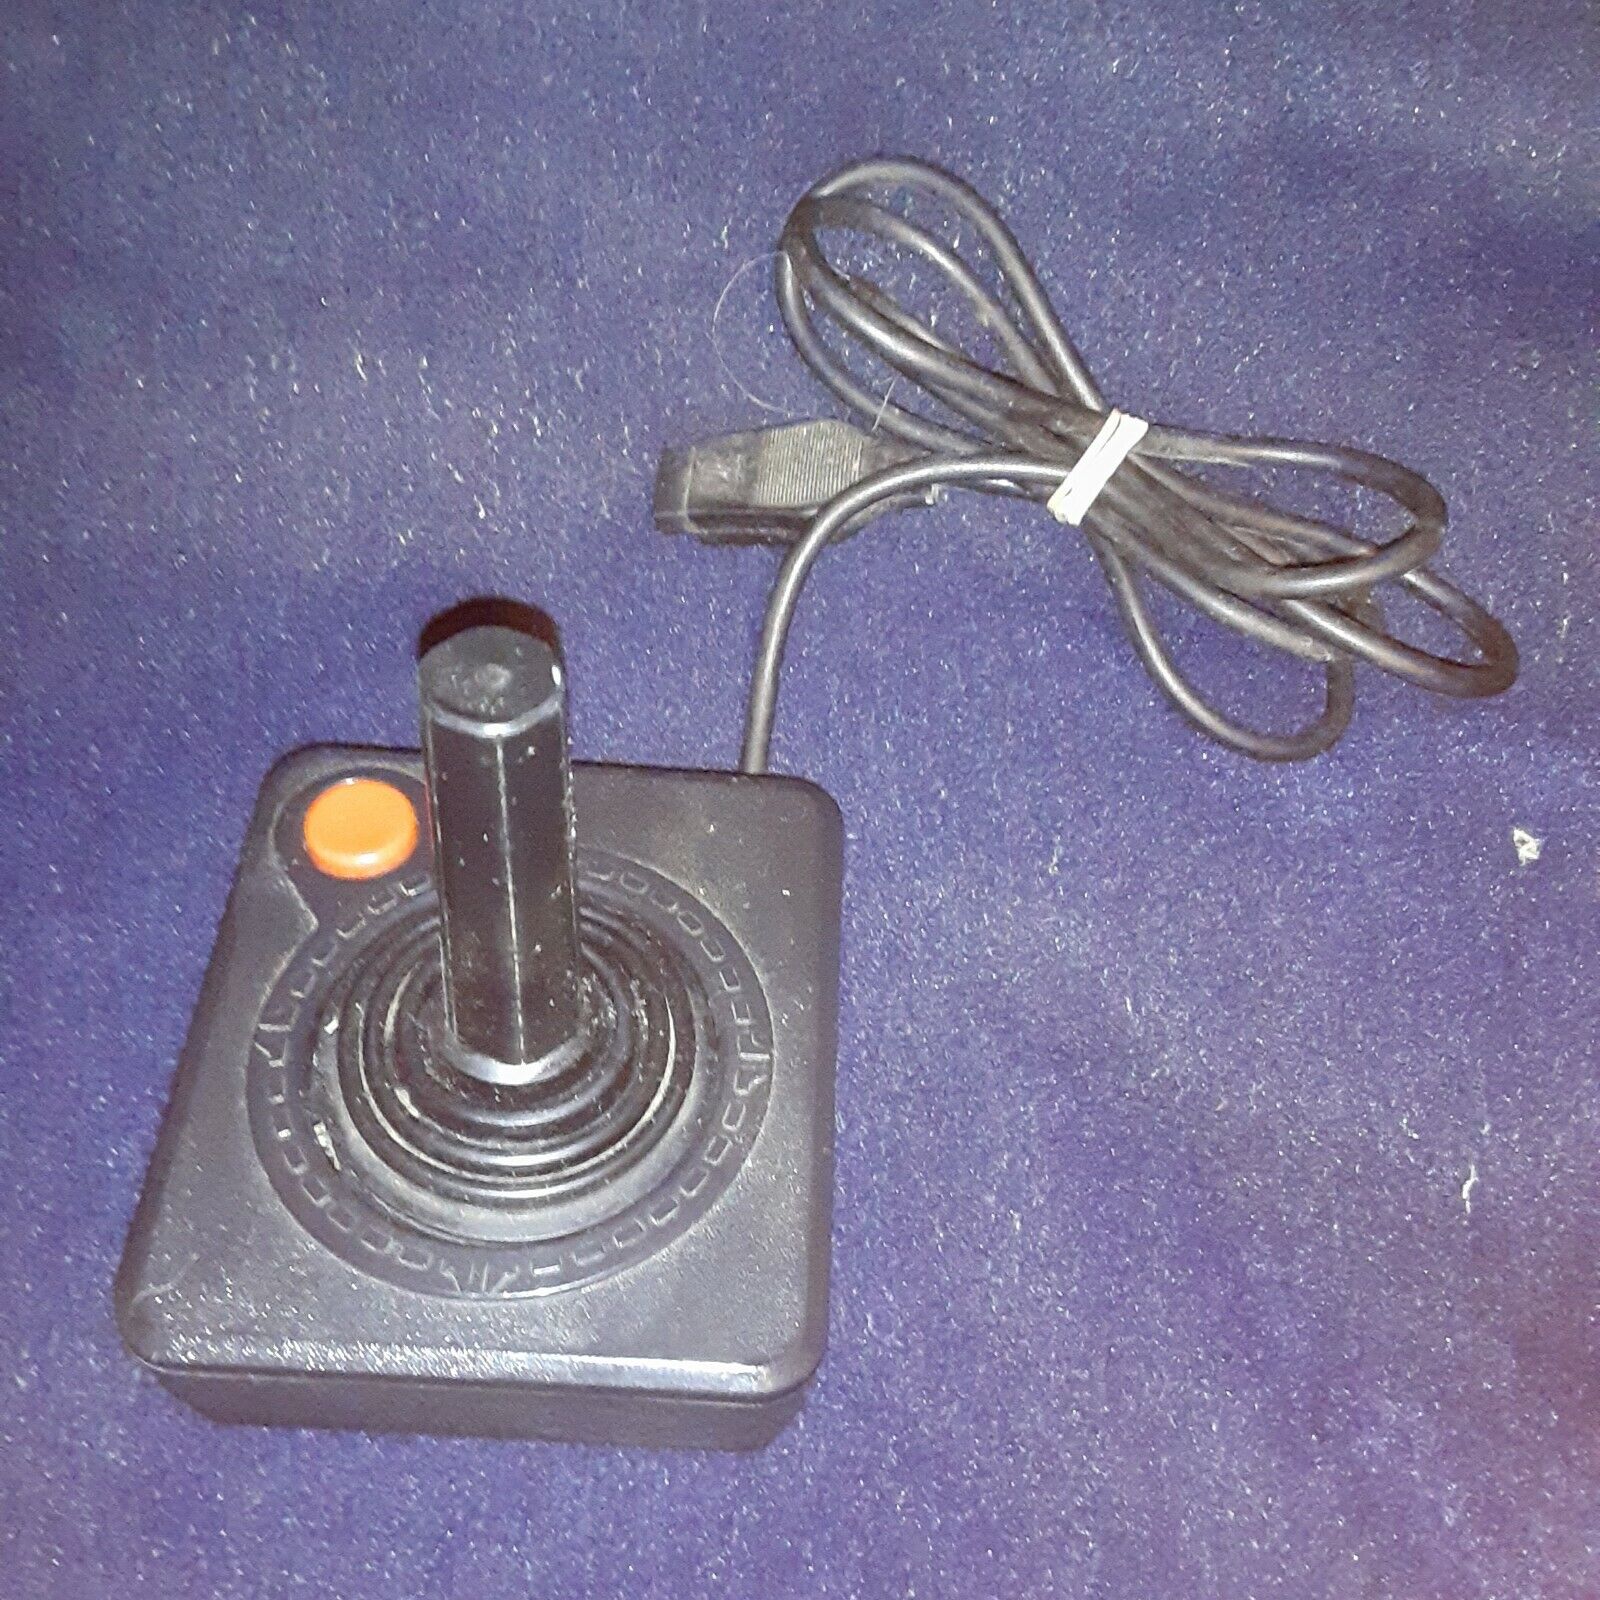 Atari 2600 SALENEW very popular Joystick Controller Is Daily bargain sale As Untested